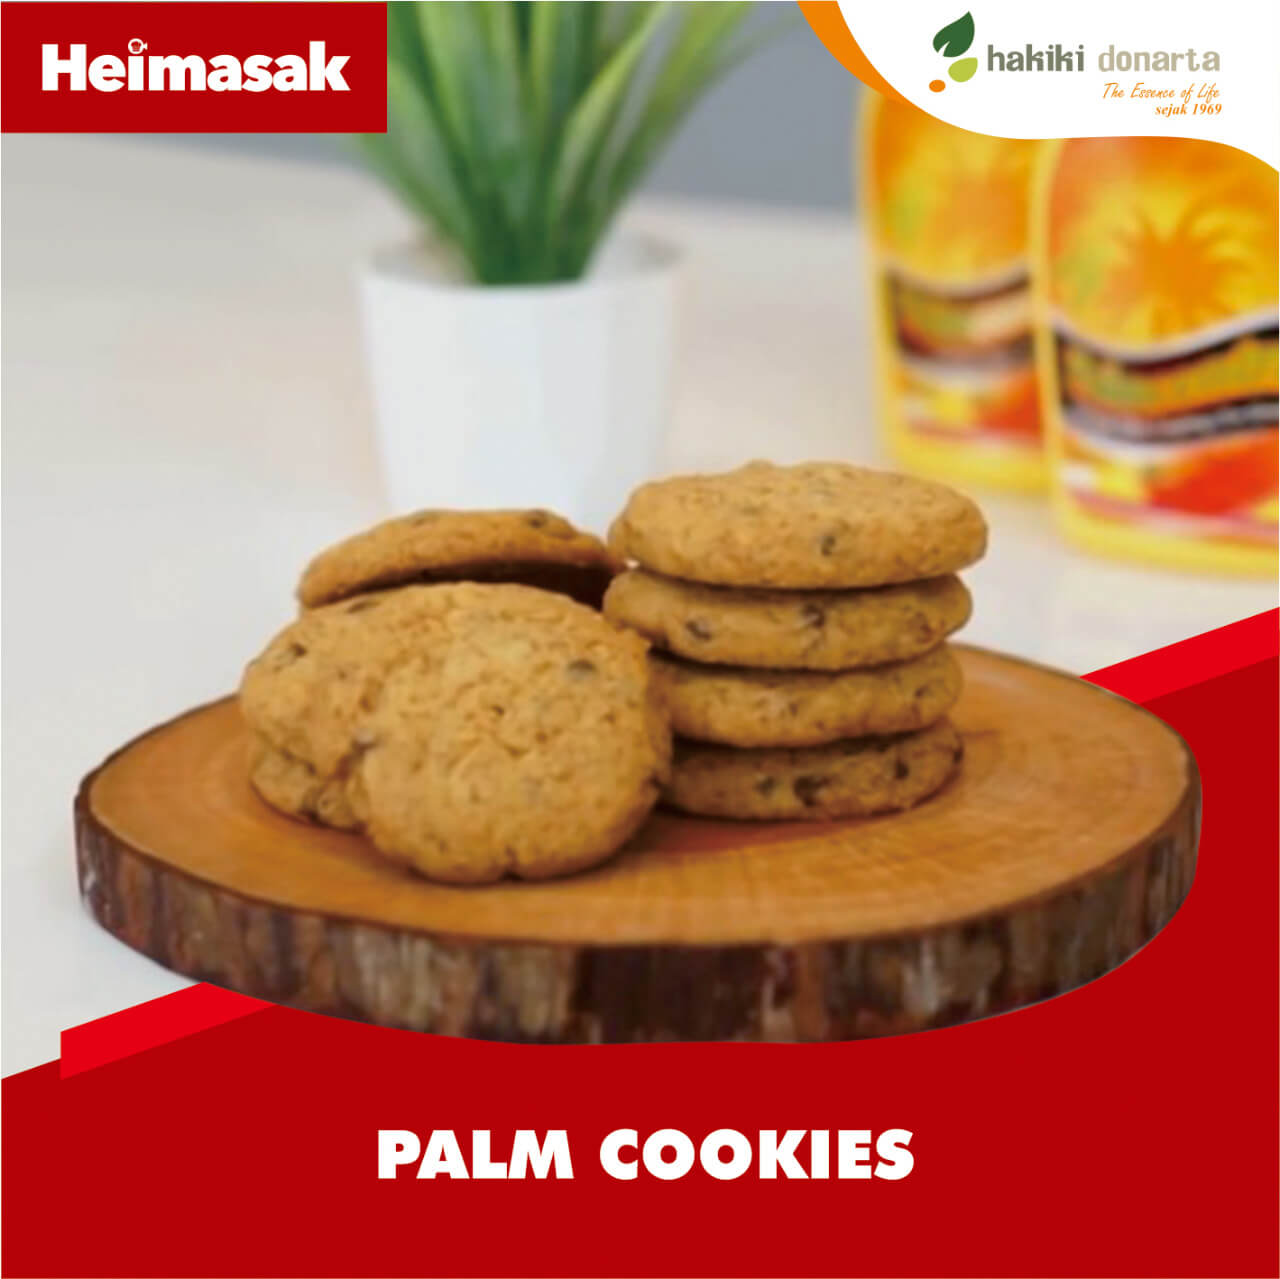 Heimasak – Hakiki Donarta – Palm Cookies